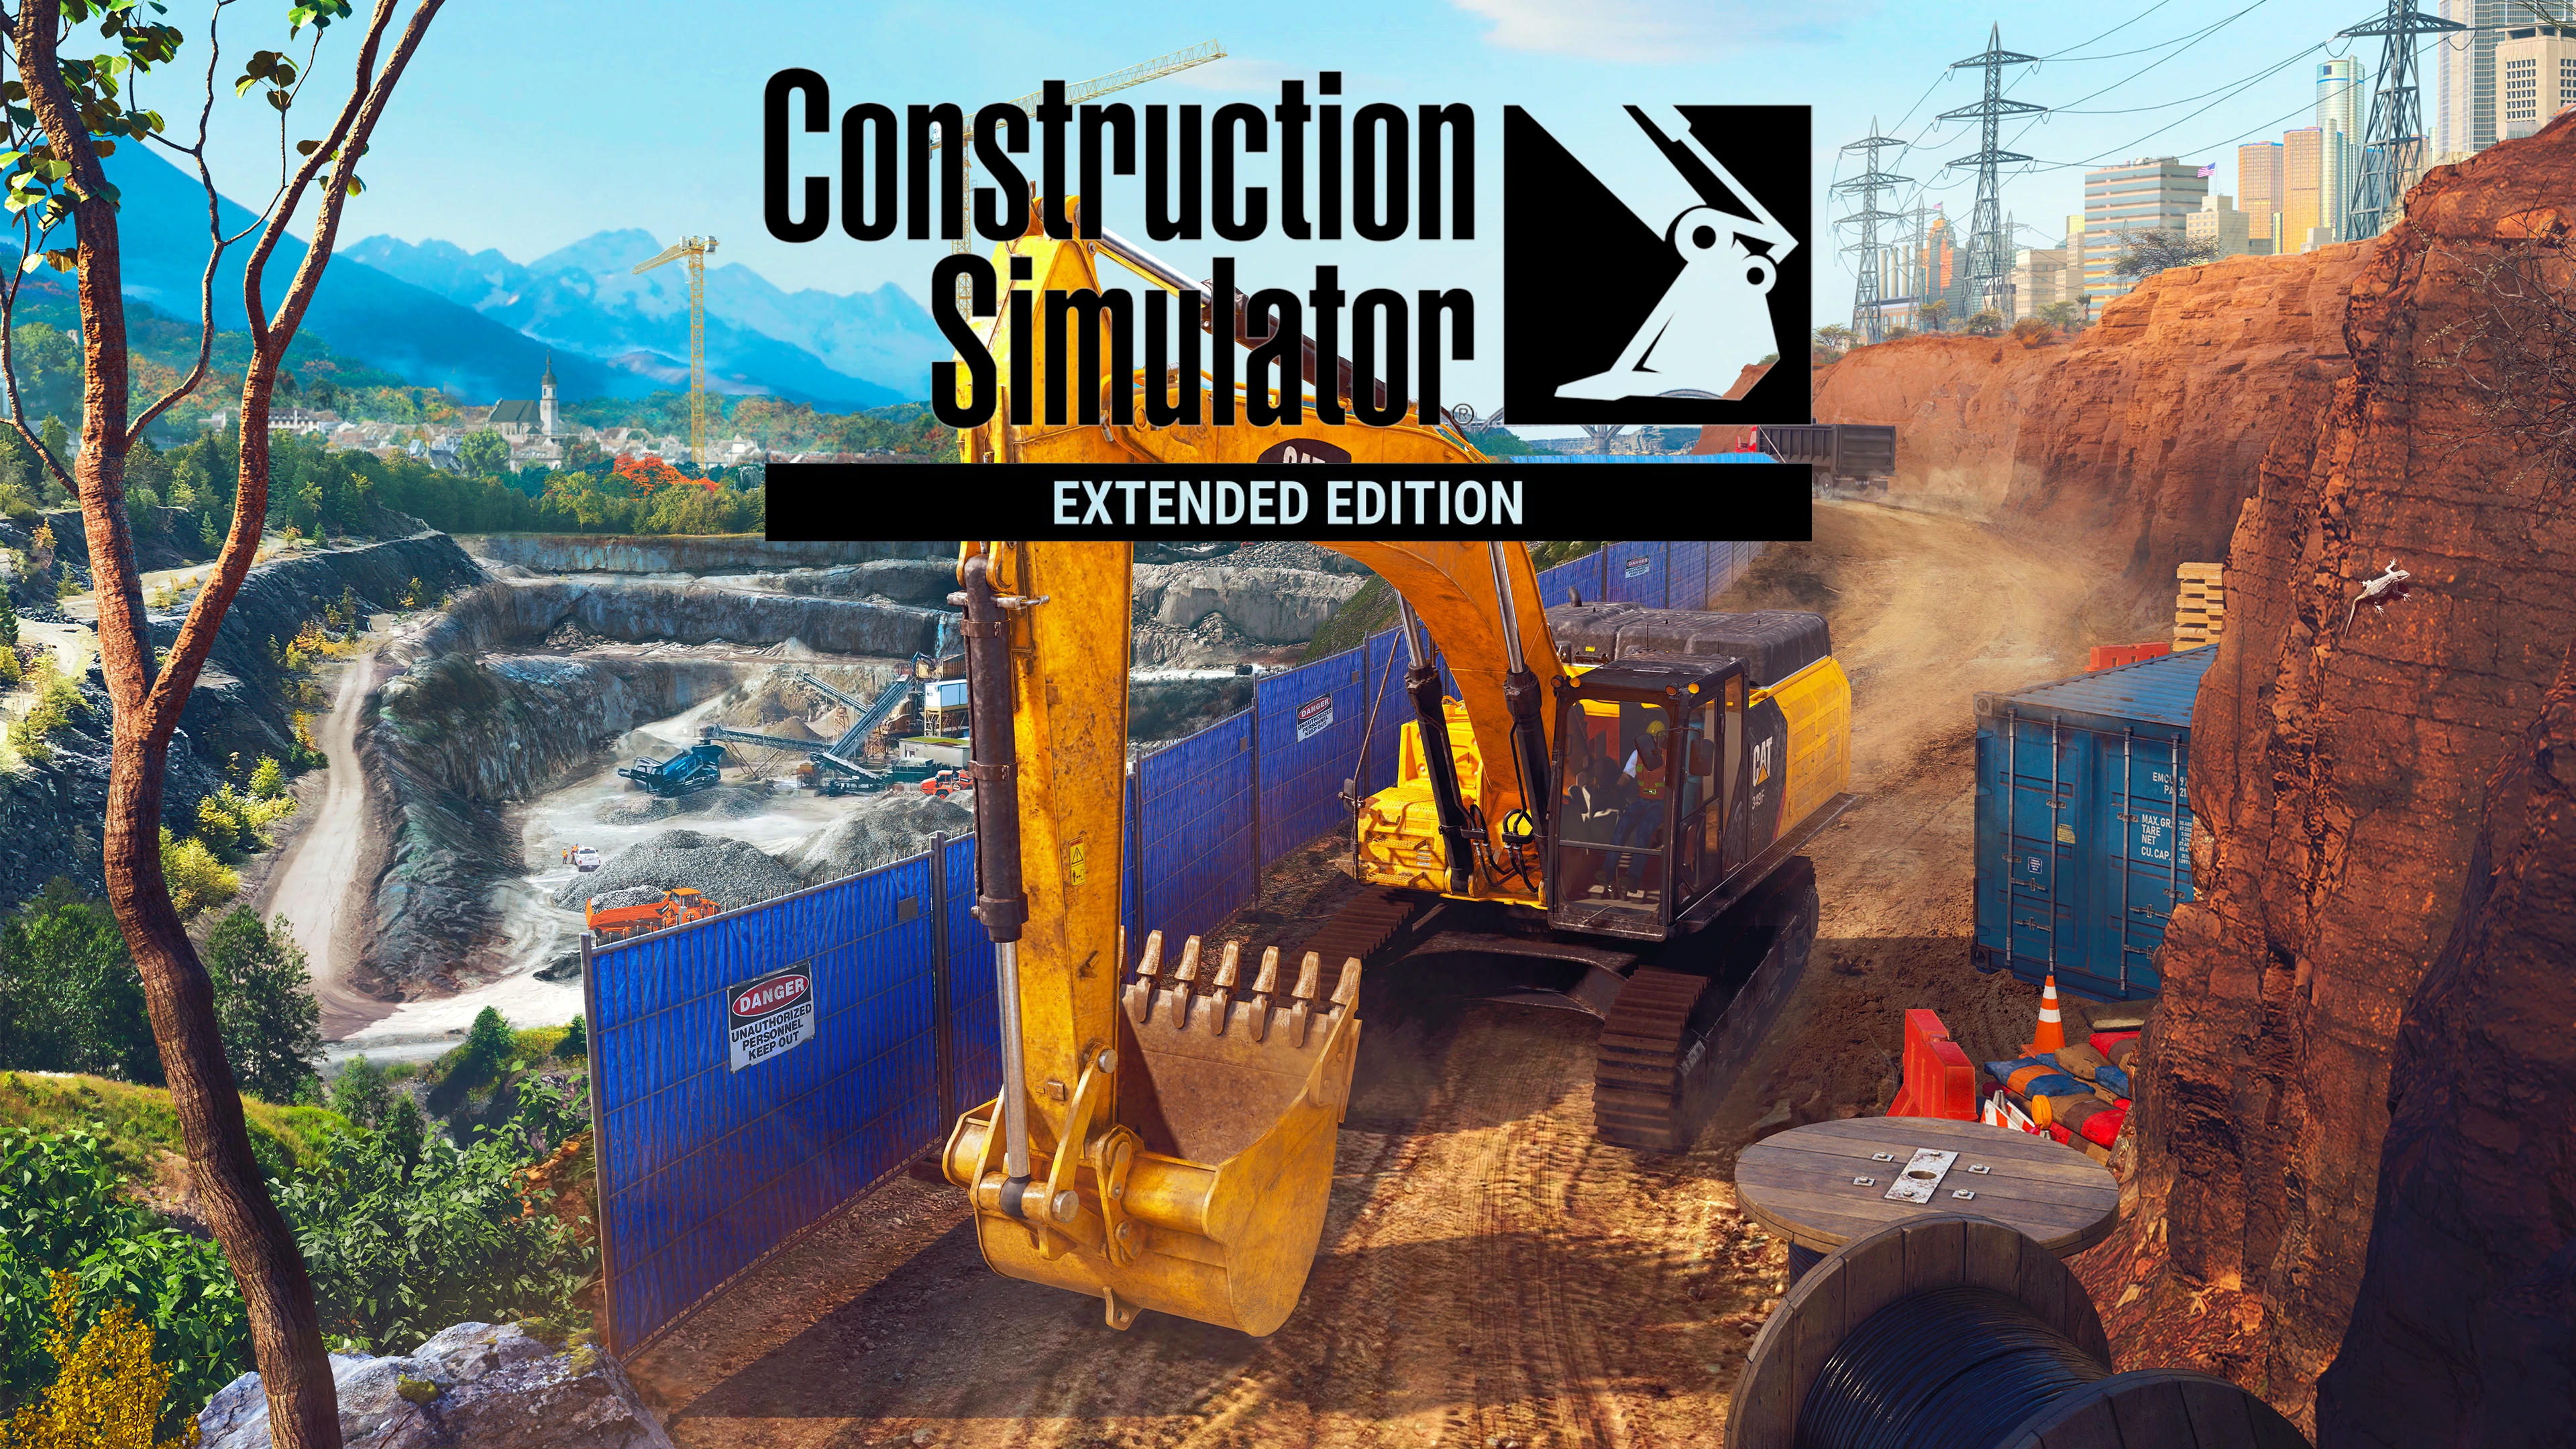 Comprar Builder Simulator Steam